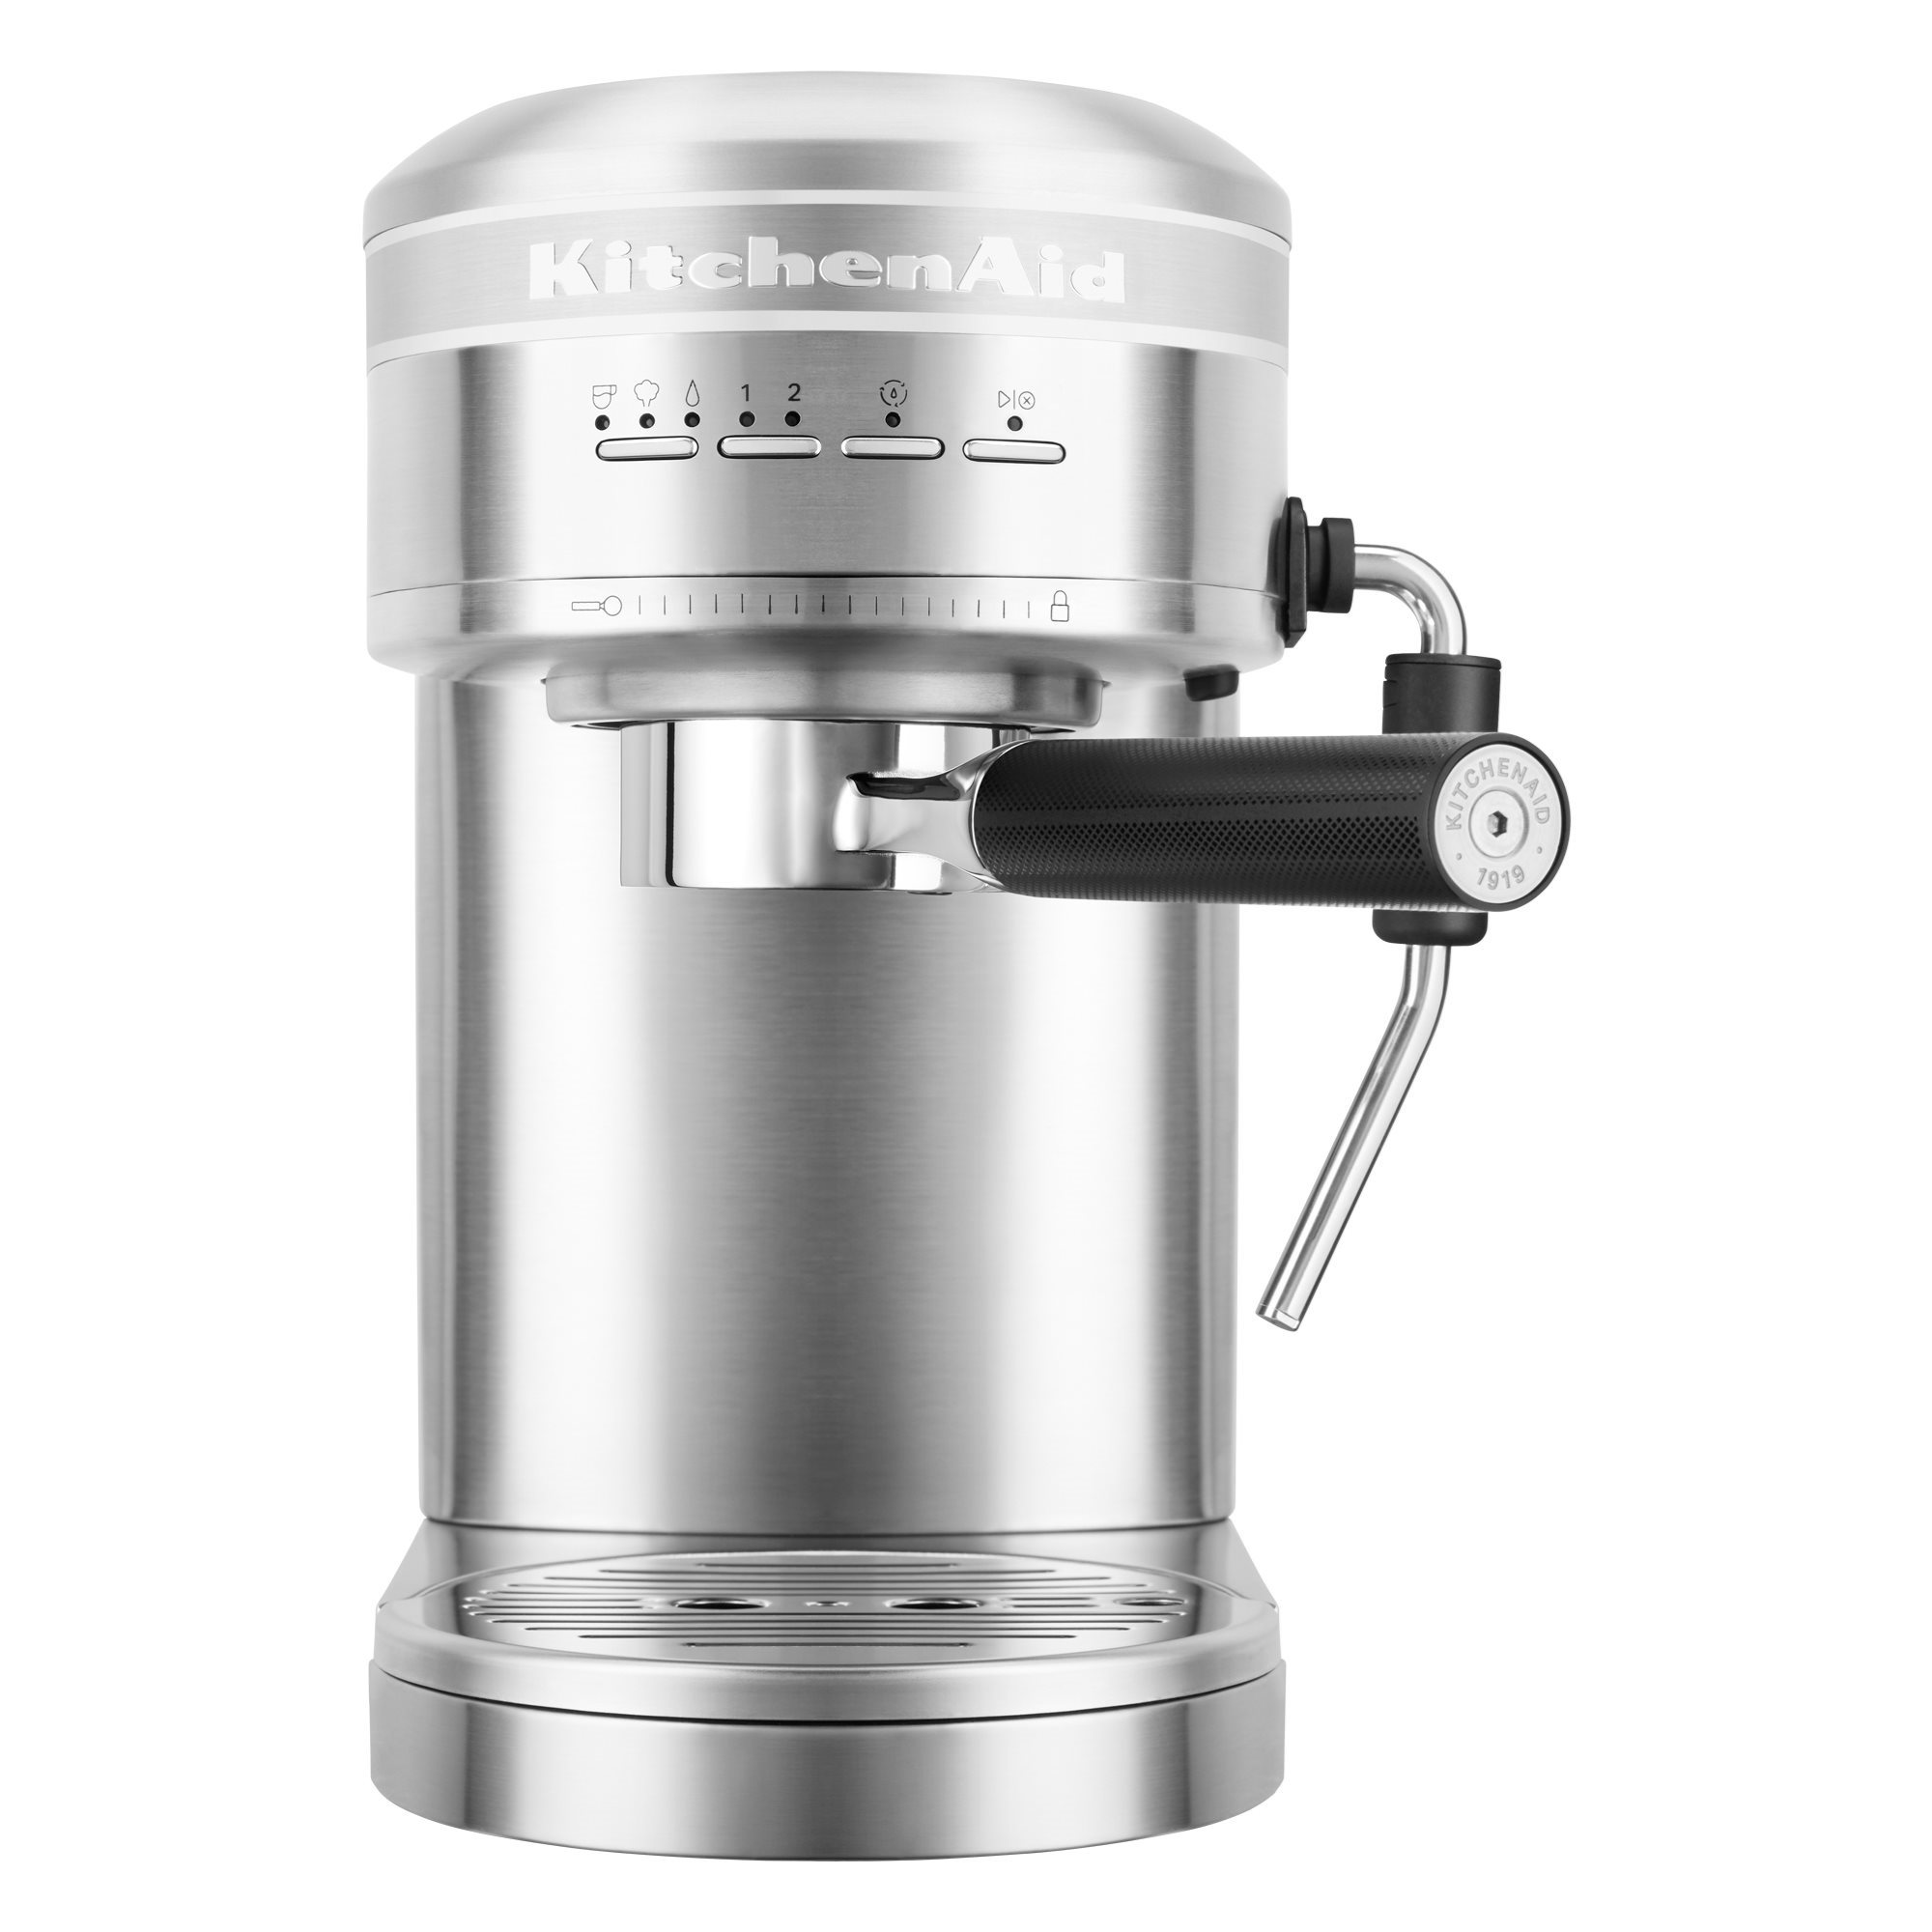 Artisan electric coffee grinder, Almond Cream color - KitchenAid brand